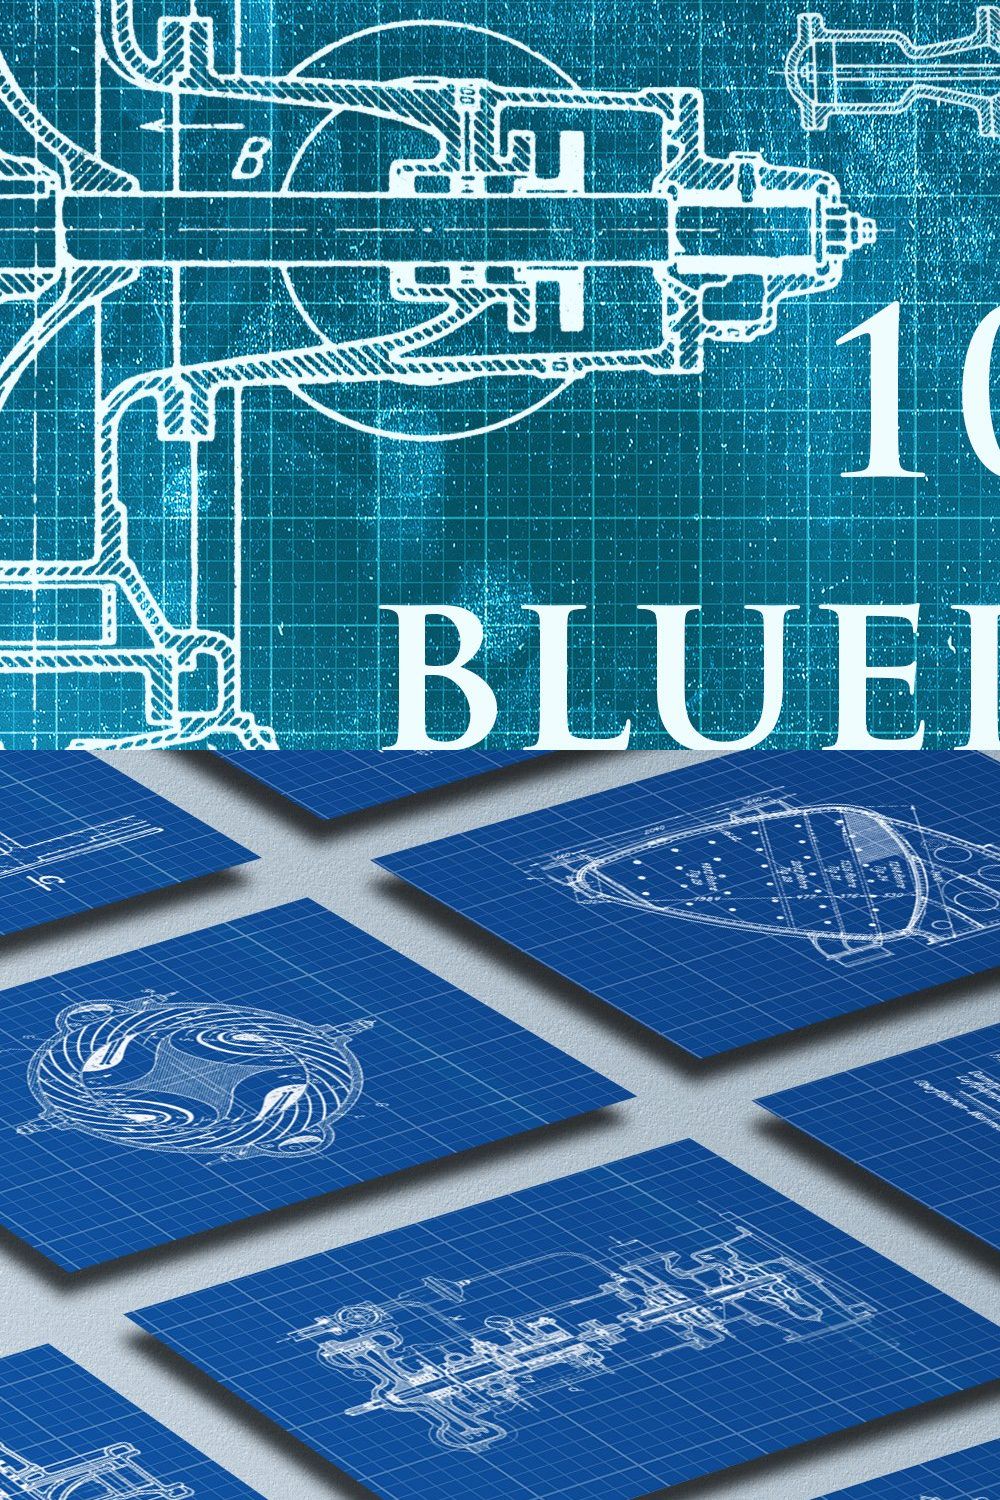 100 Blueprint Technology Brushes pinterest preview image.